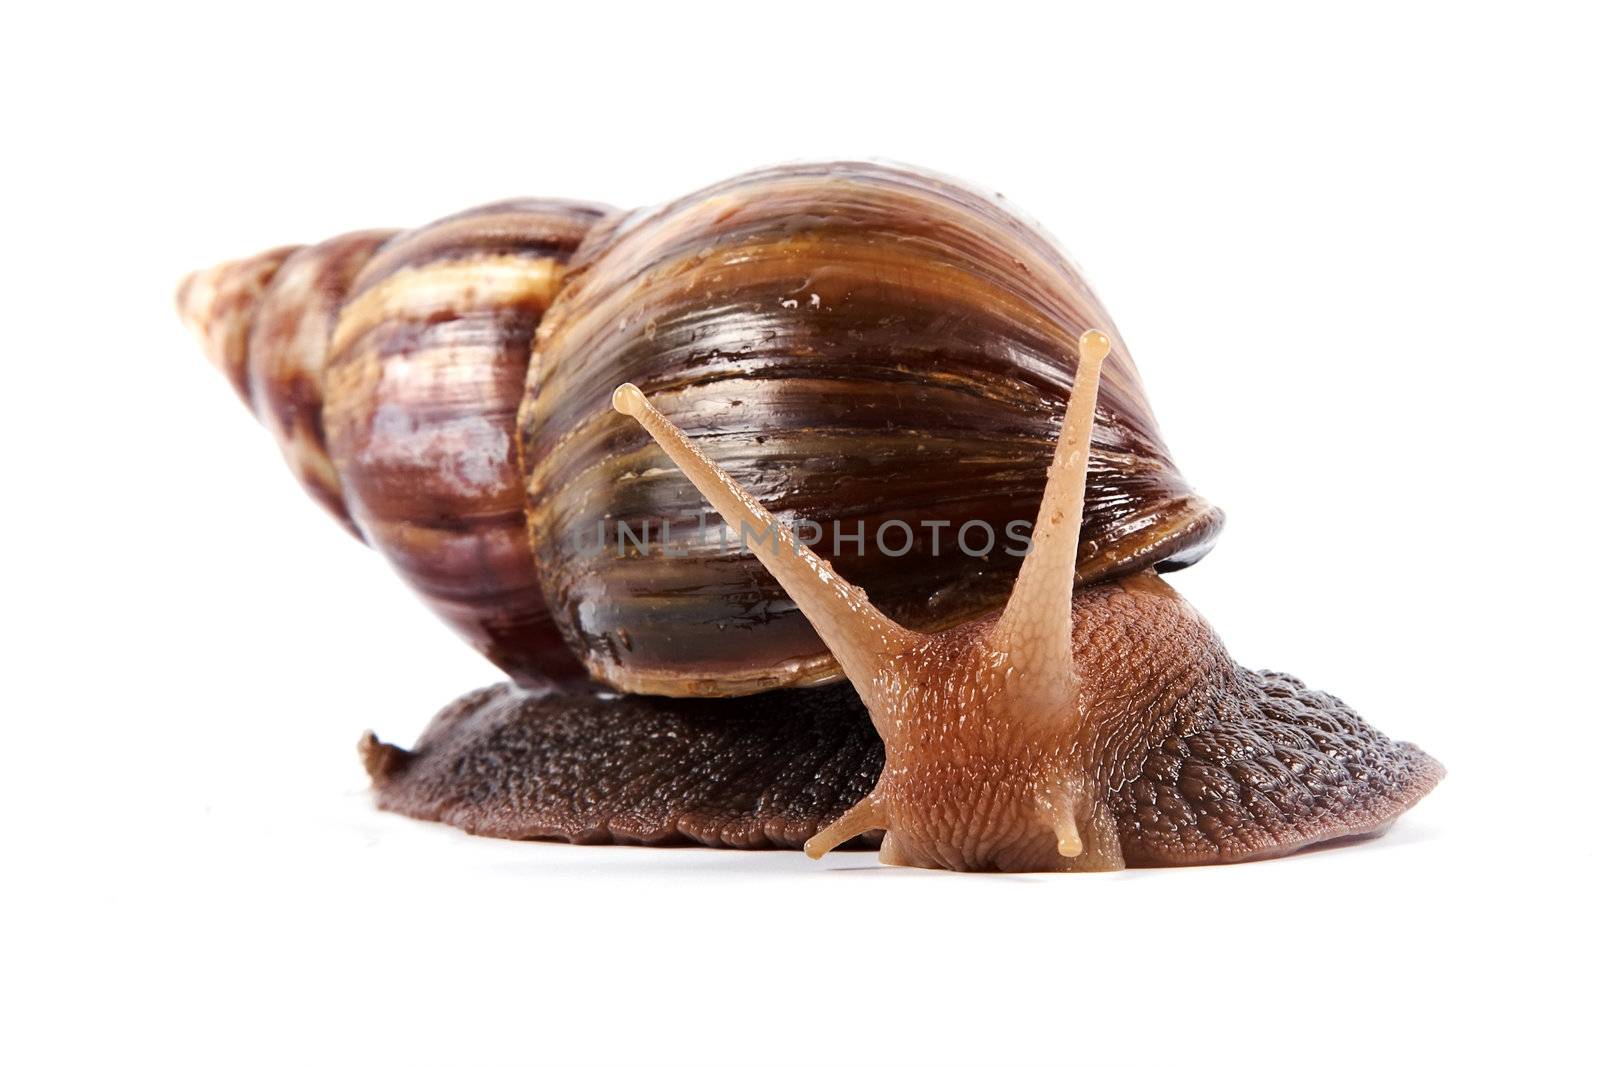 Akhatin's snail on a white background